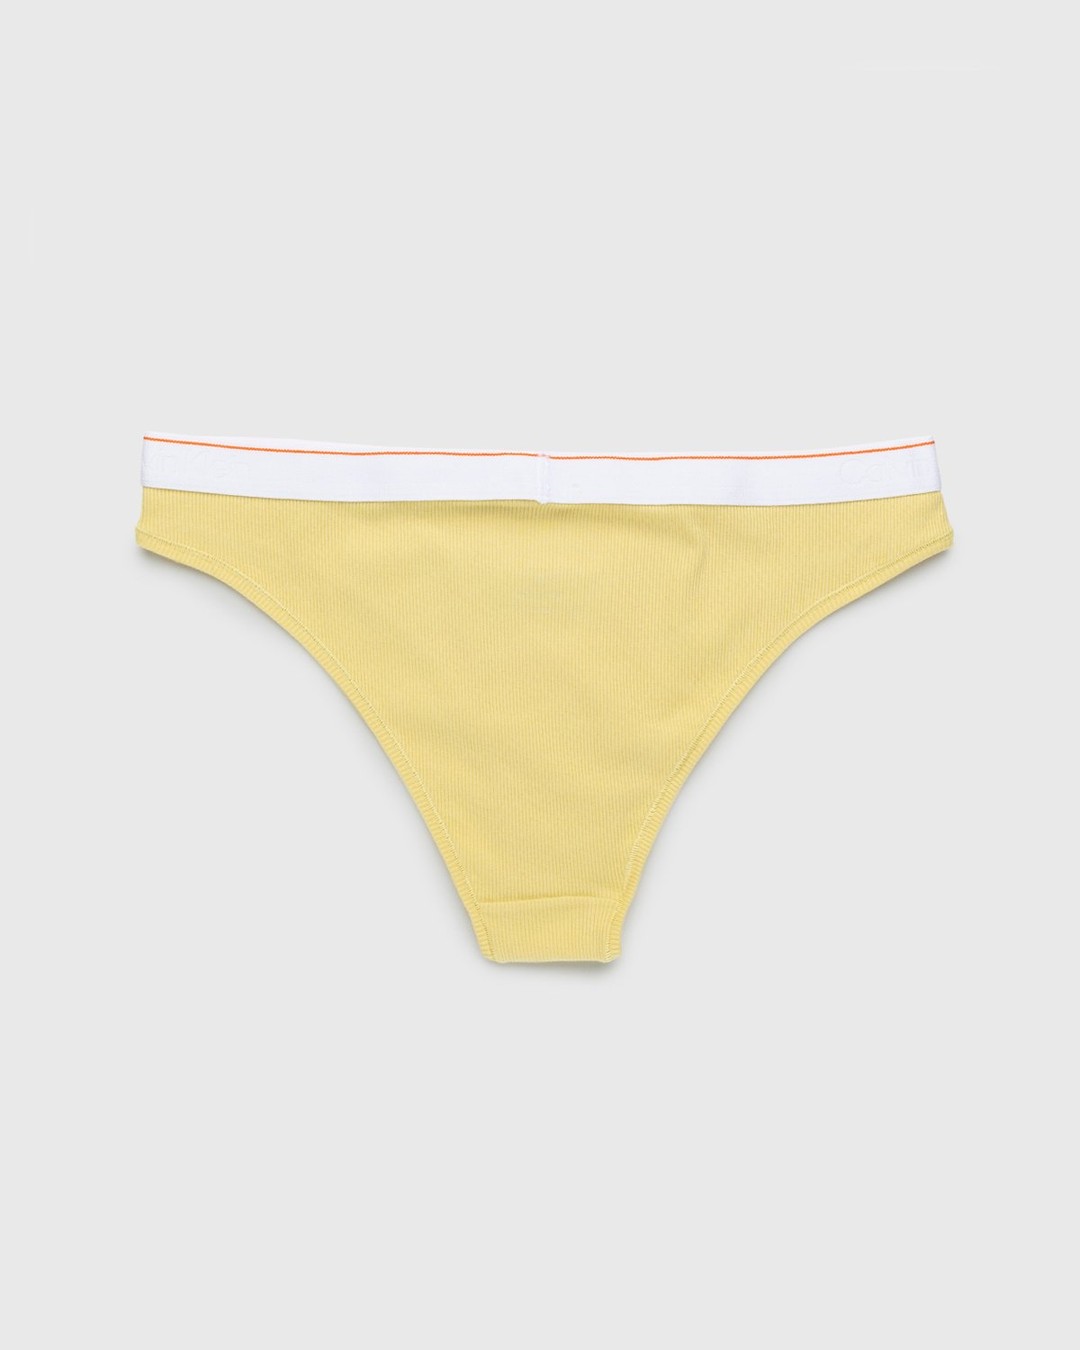 Heron Preston x Calvin Klein – Womens High Waisted Tanga Pale Yellow